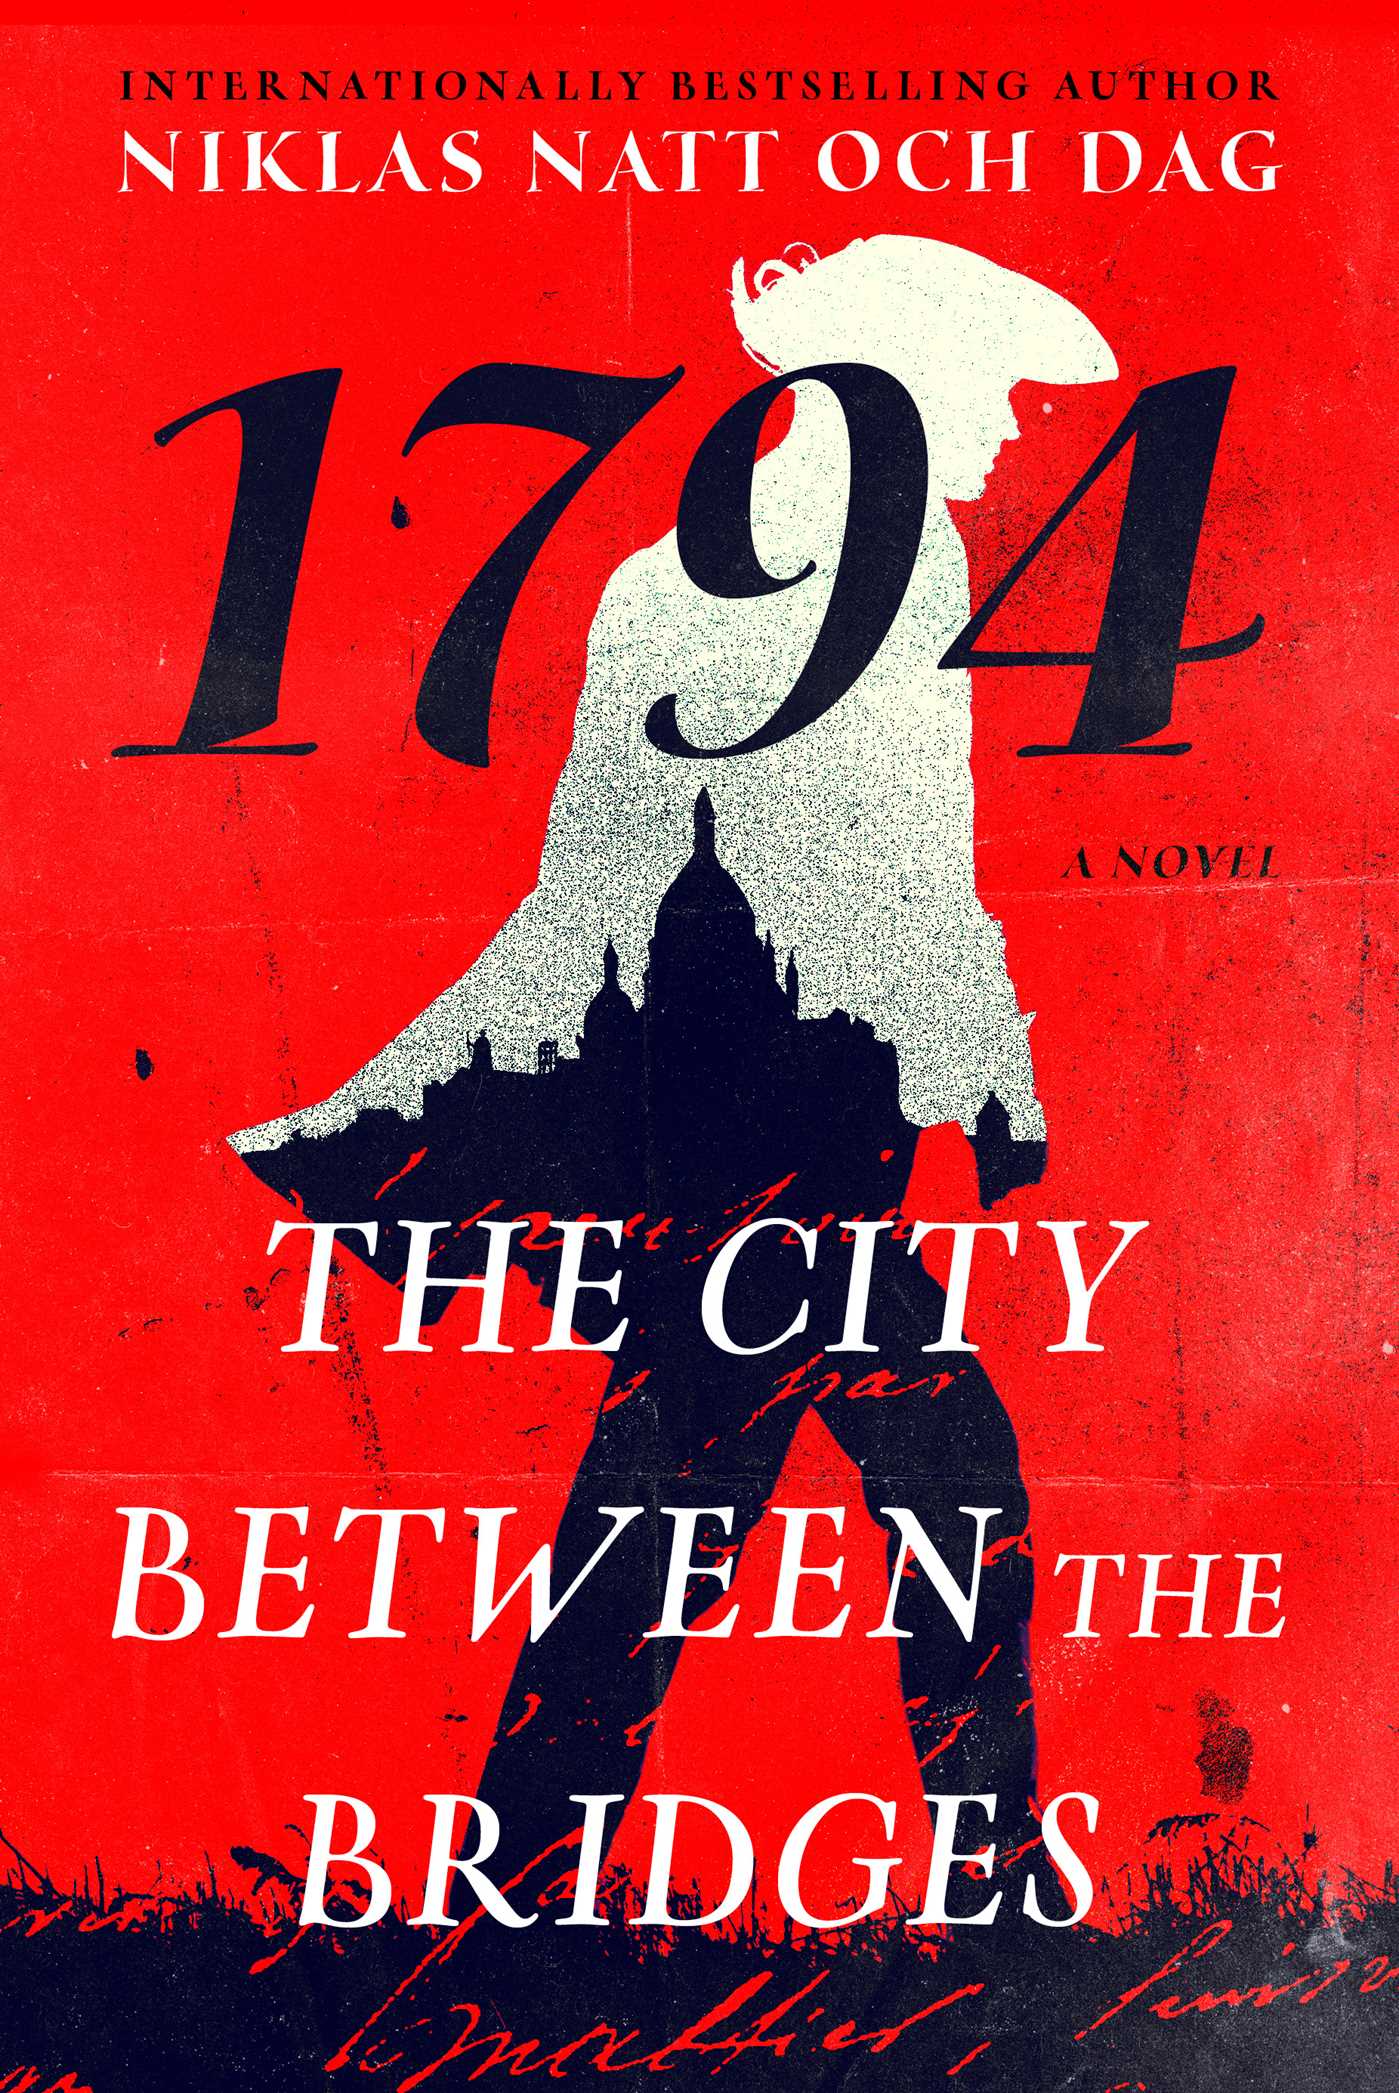 The City Between the Bridges : 1794: A Novel | Natt och Dag, Niklas (Auteur)